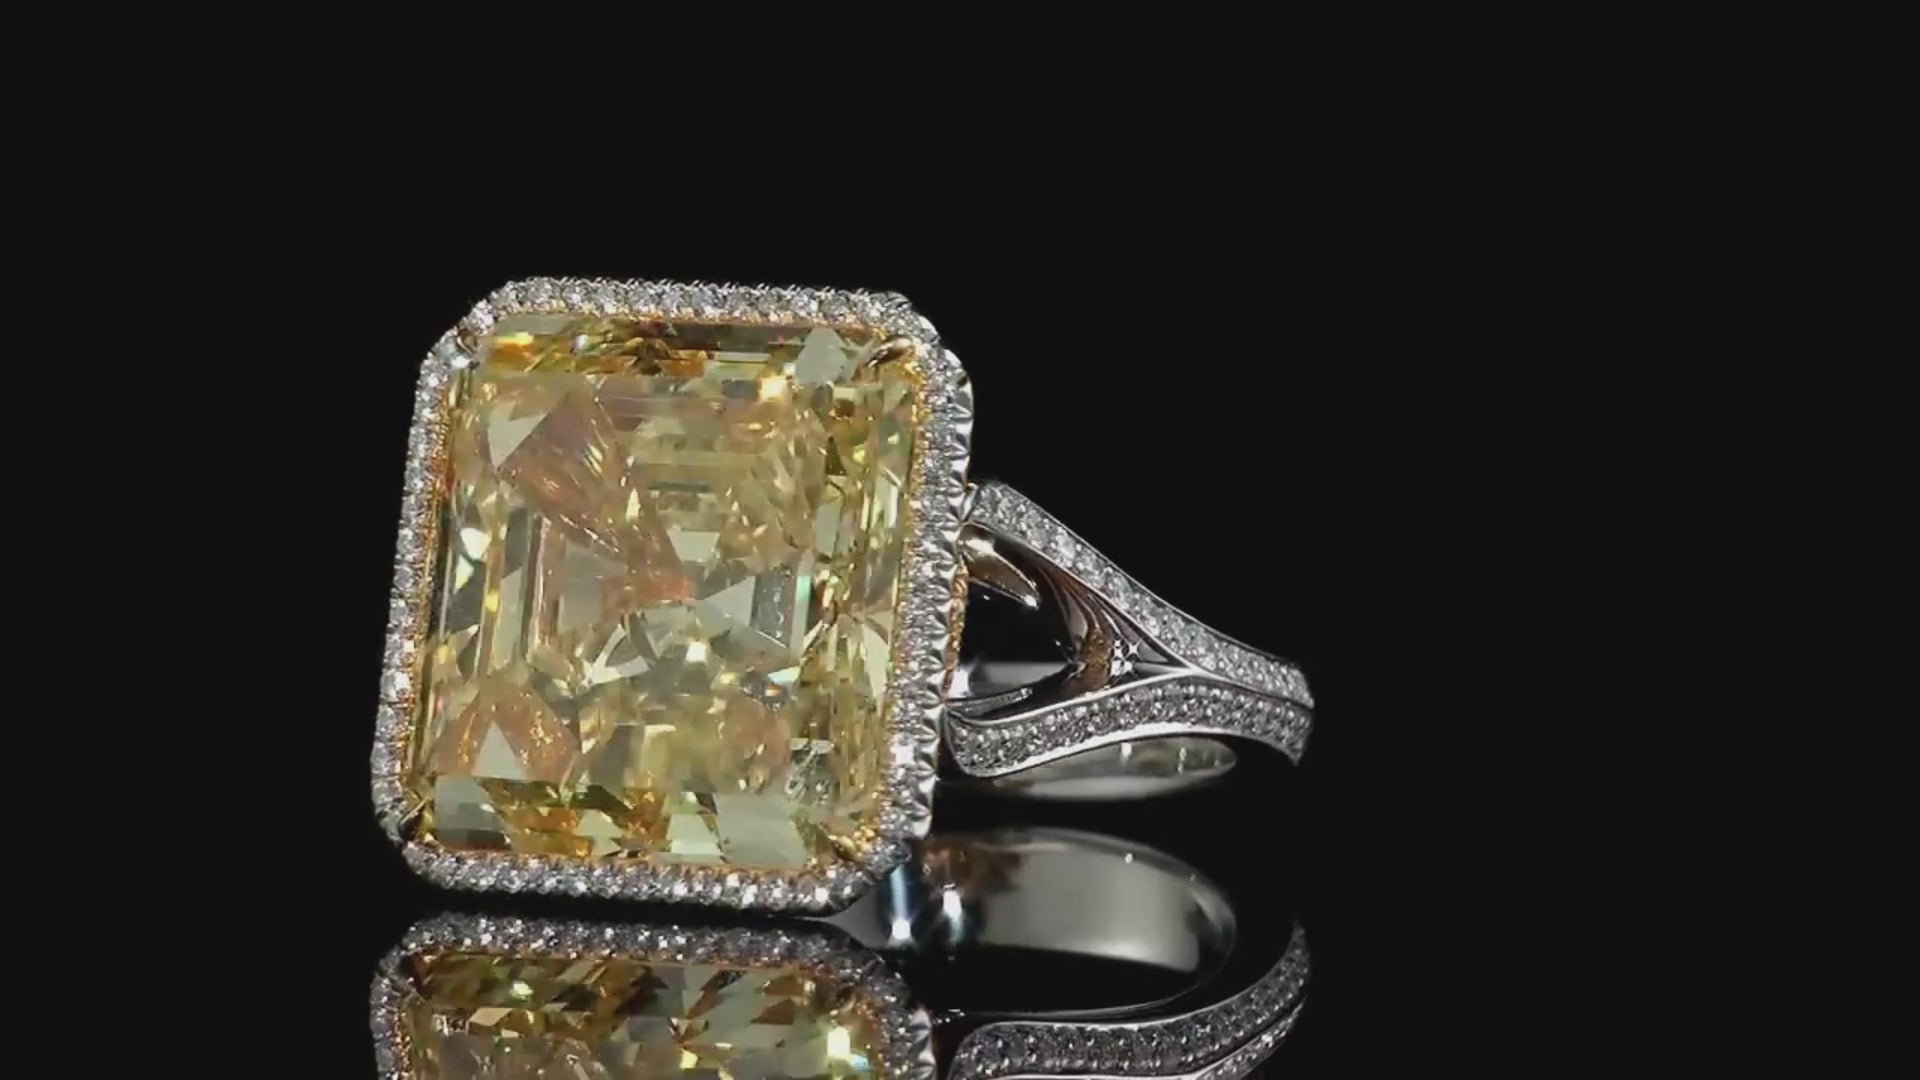 Load video: Peris Gems Diamond Jewelry Showcase